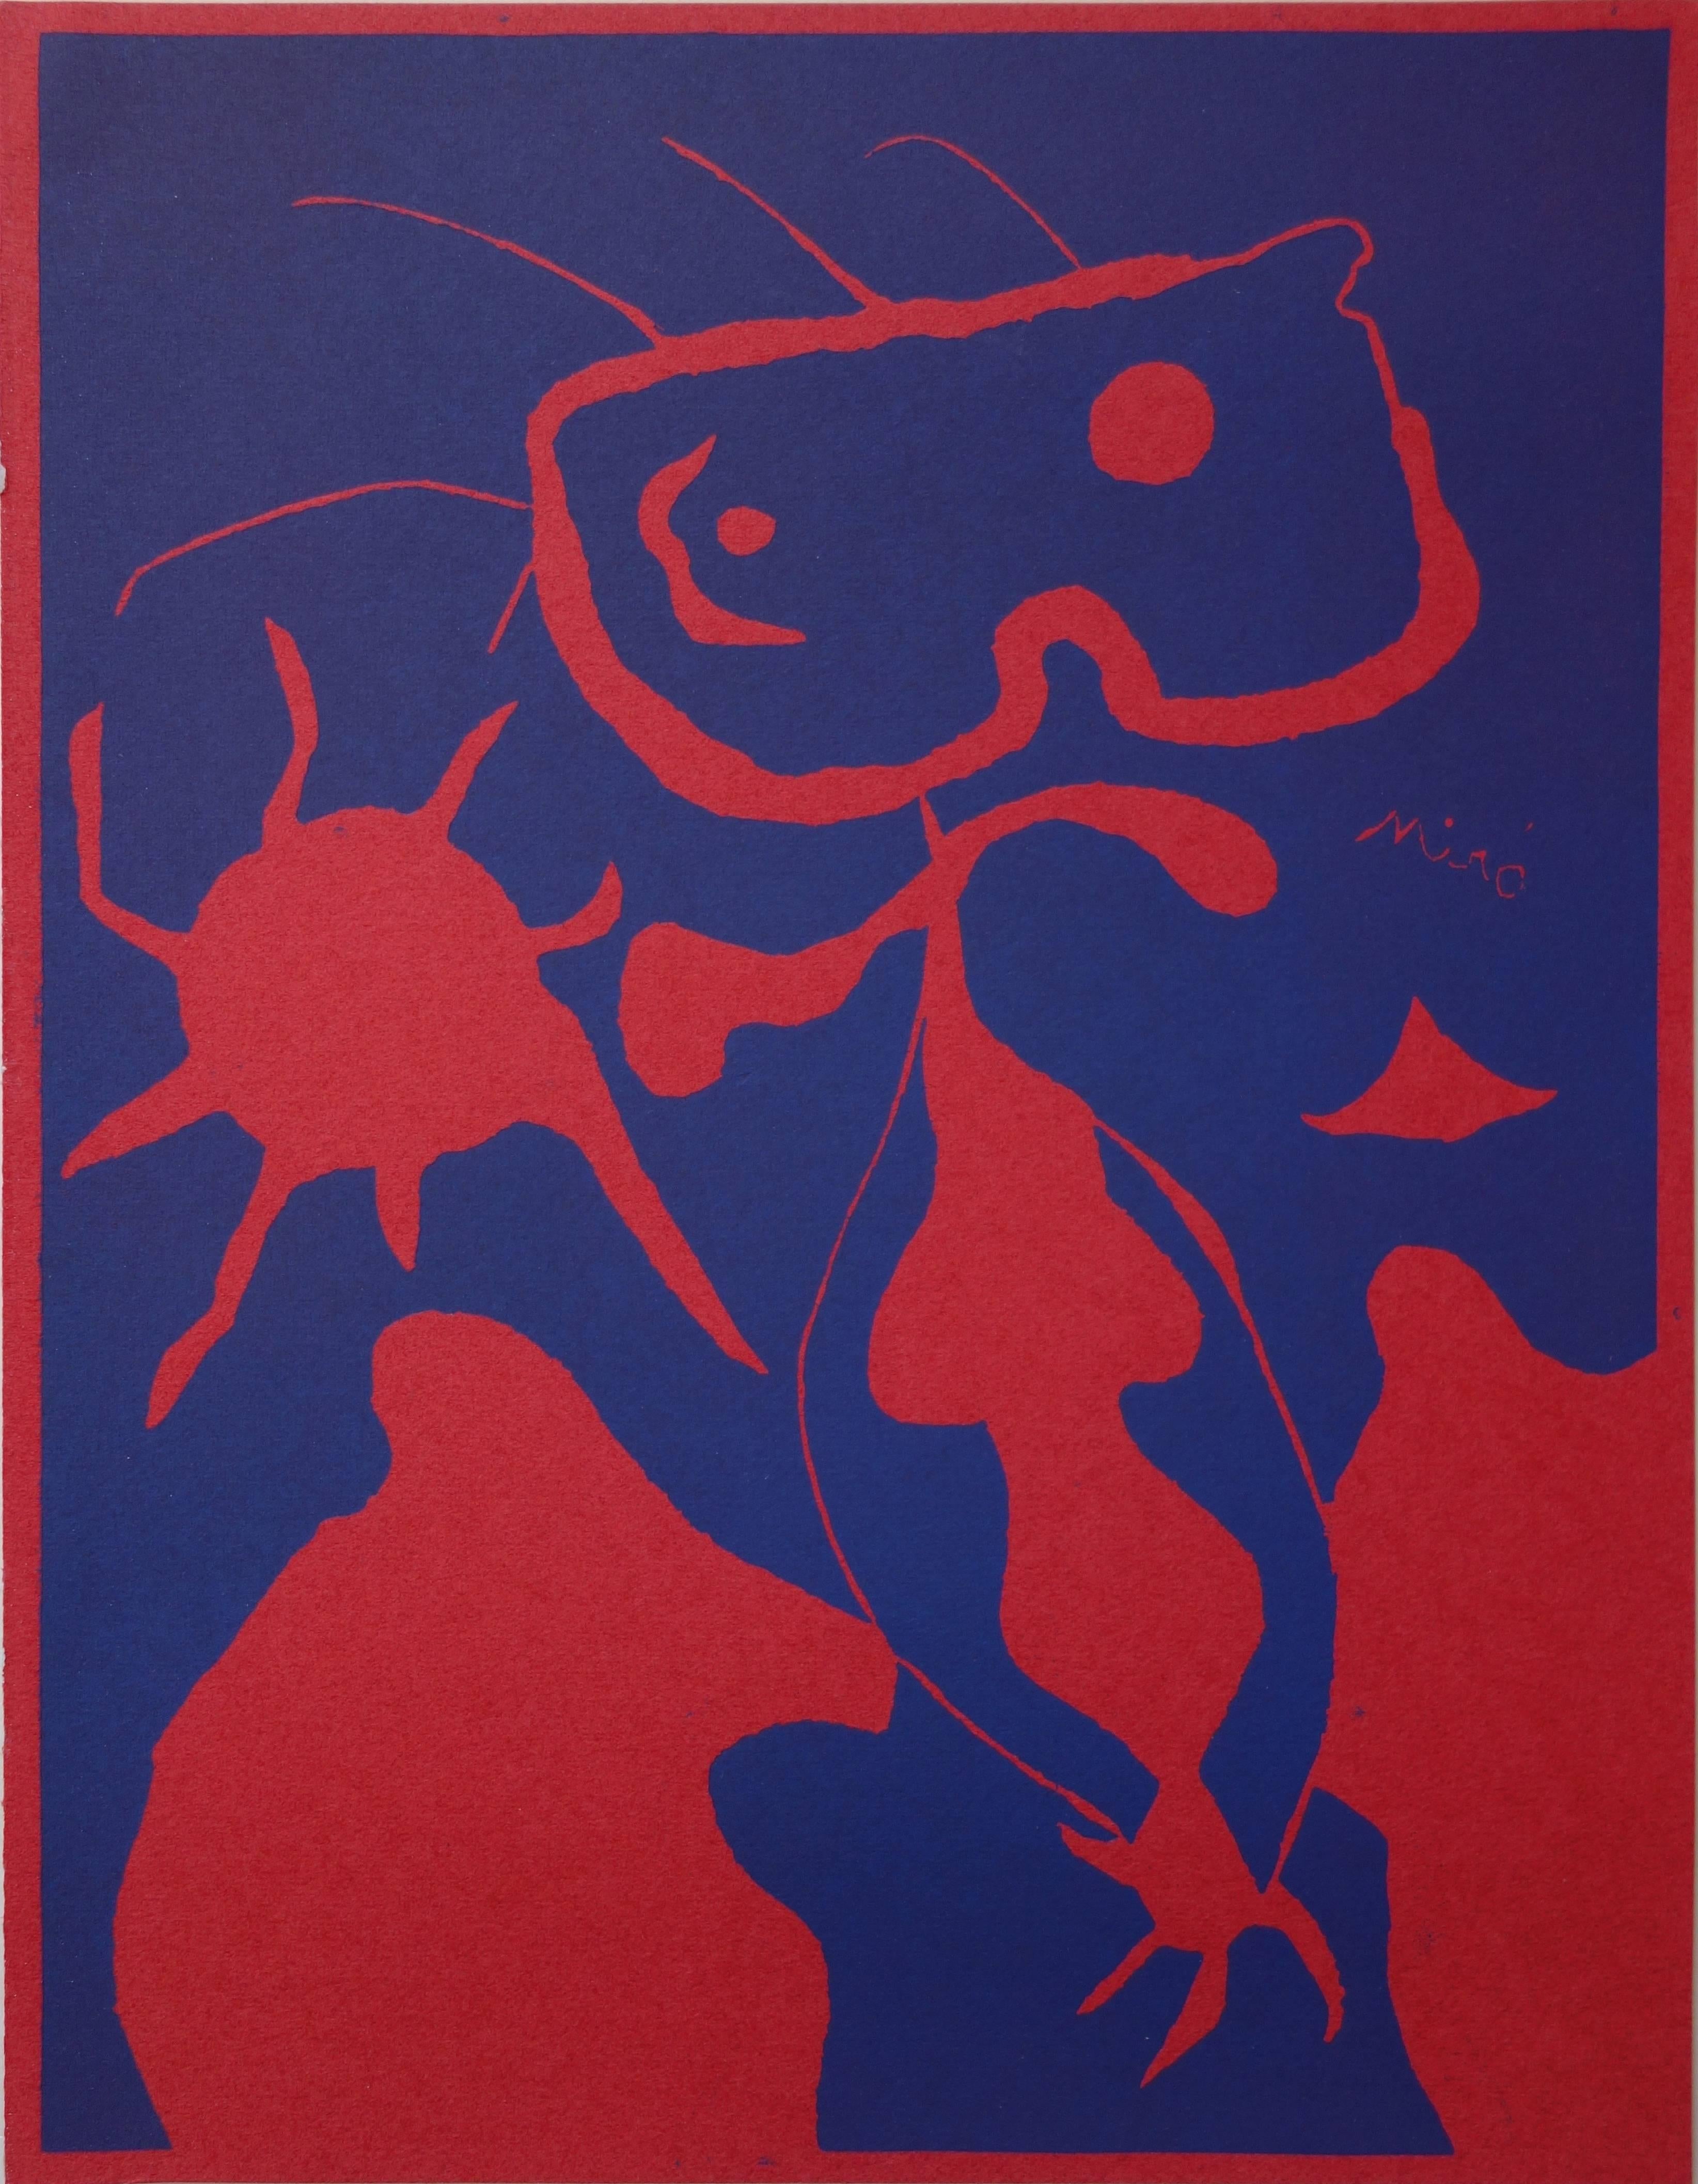 Joan Miró Abstract Print - Boy with Red Sun - Original linocut - 1938